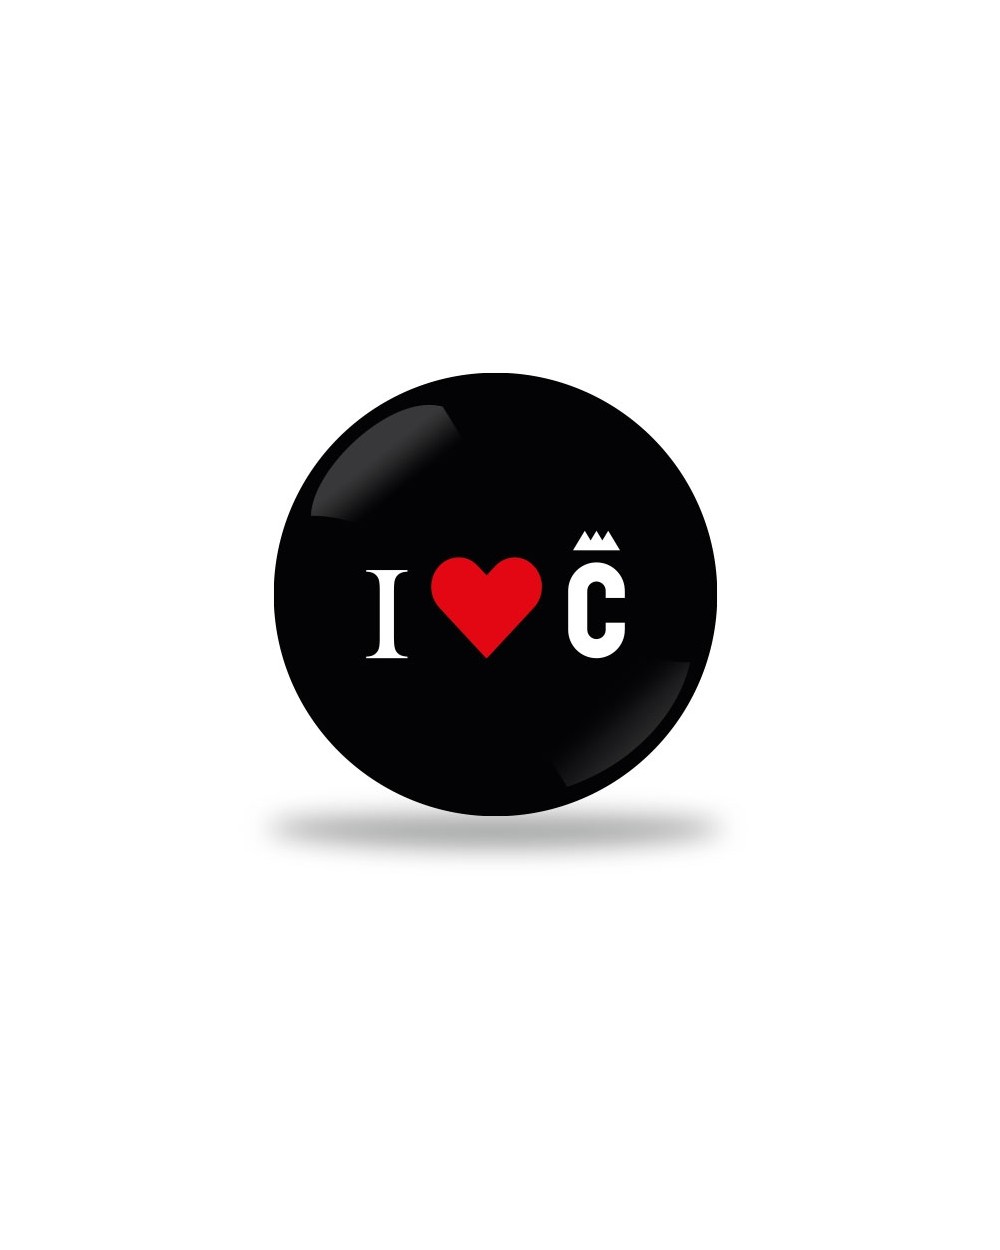 I Love C Badge